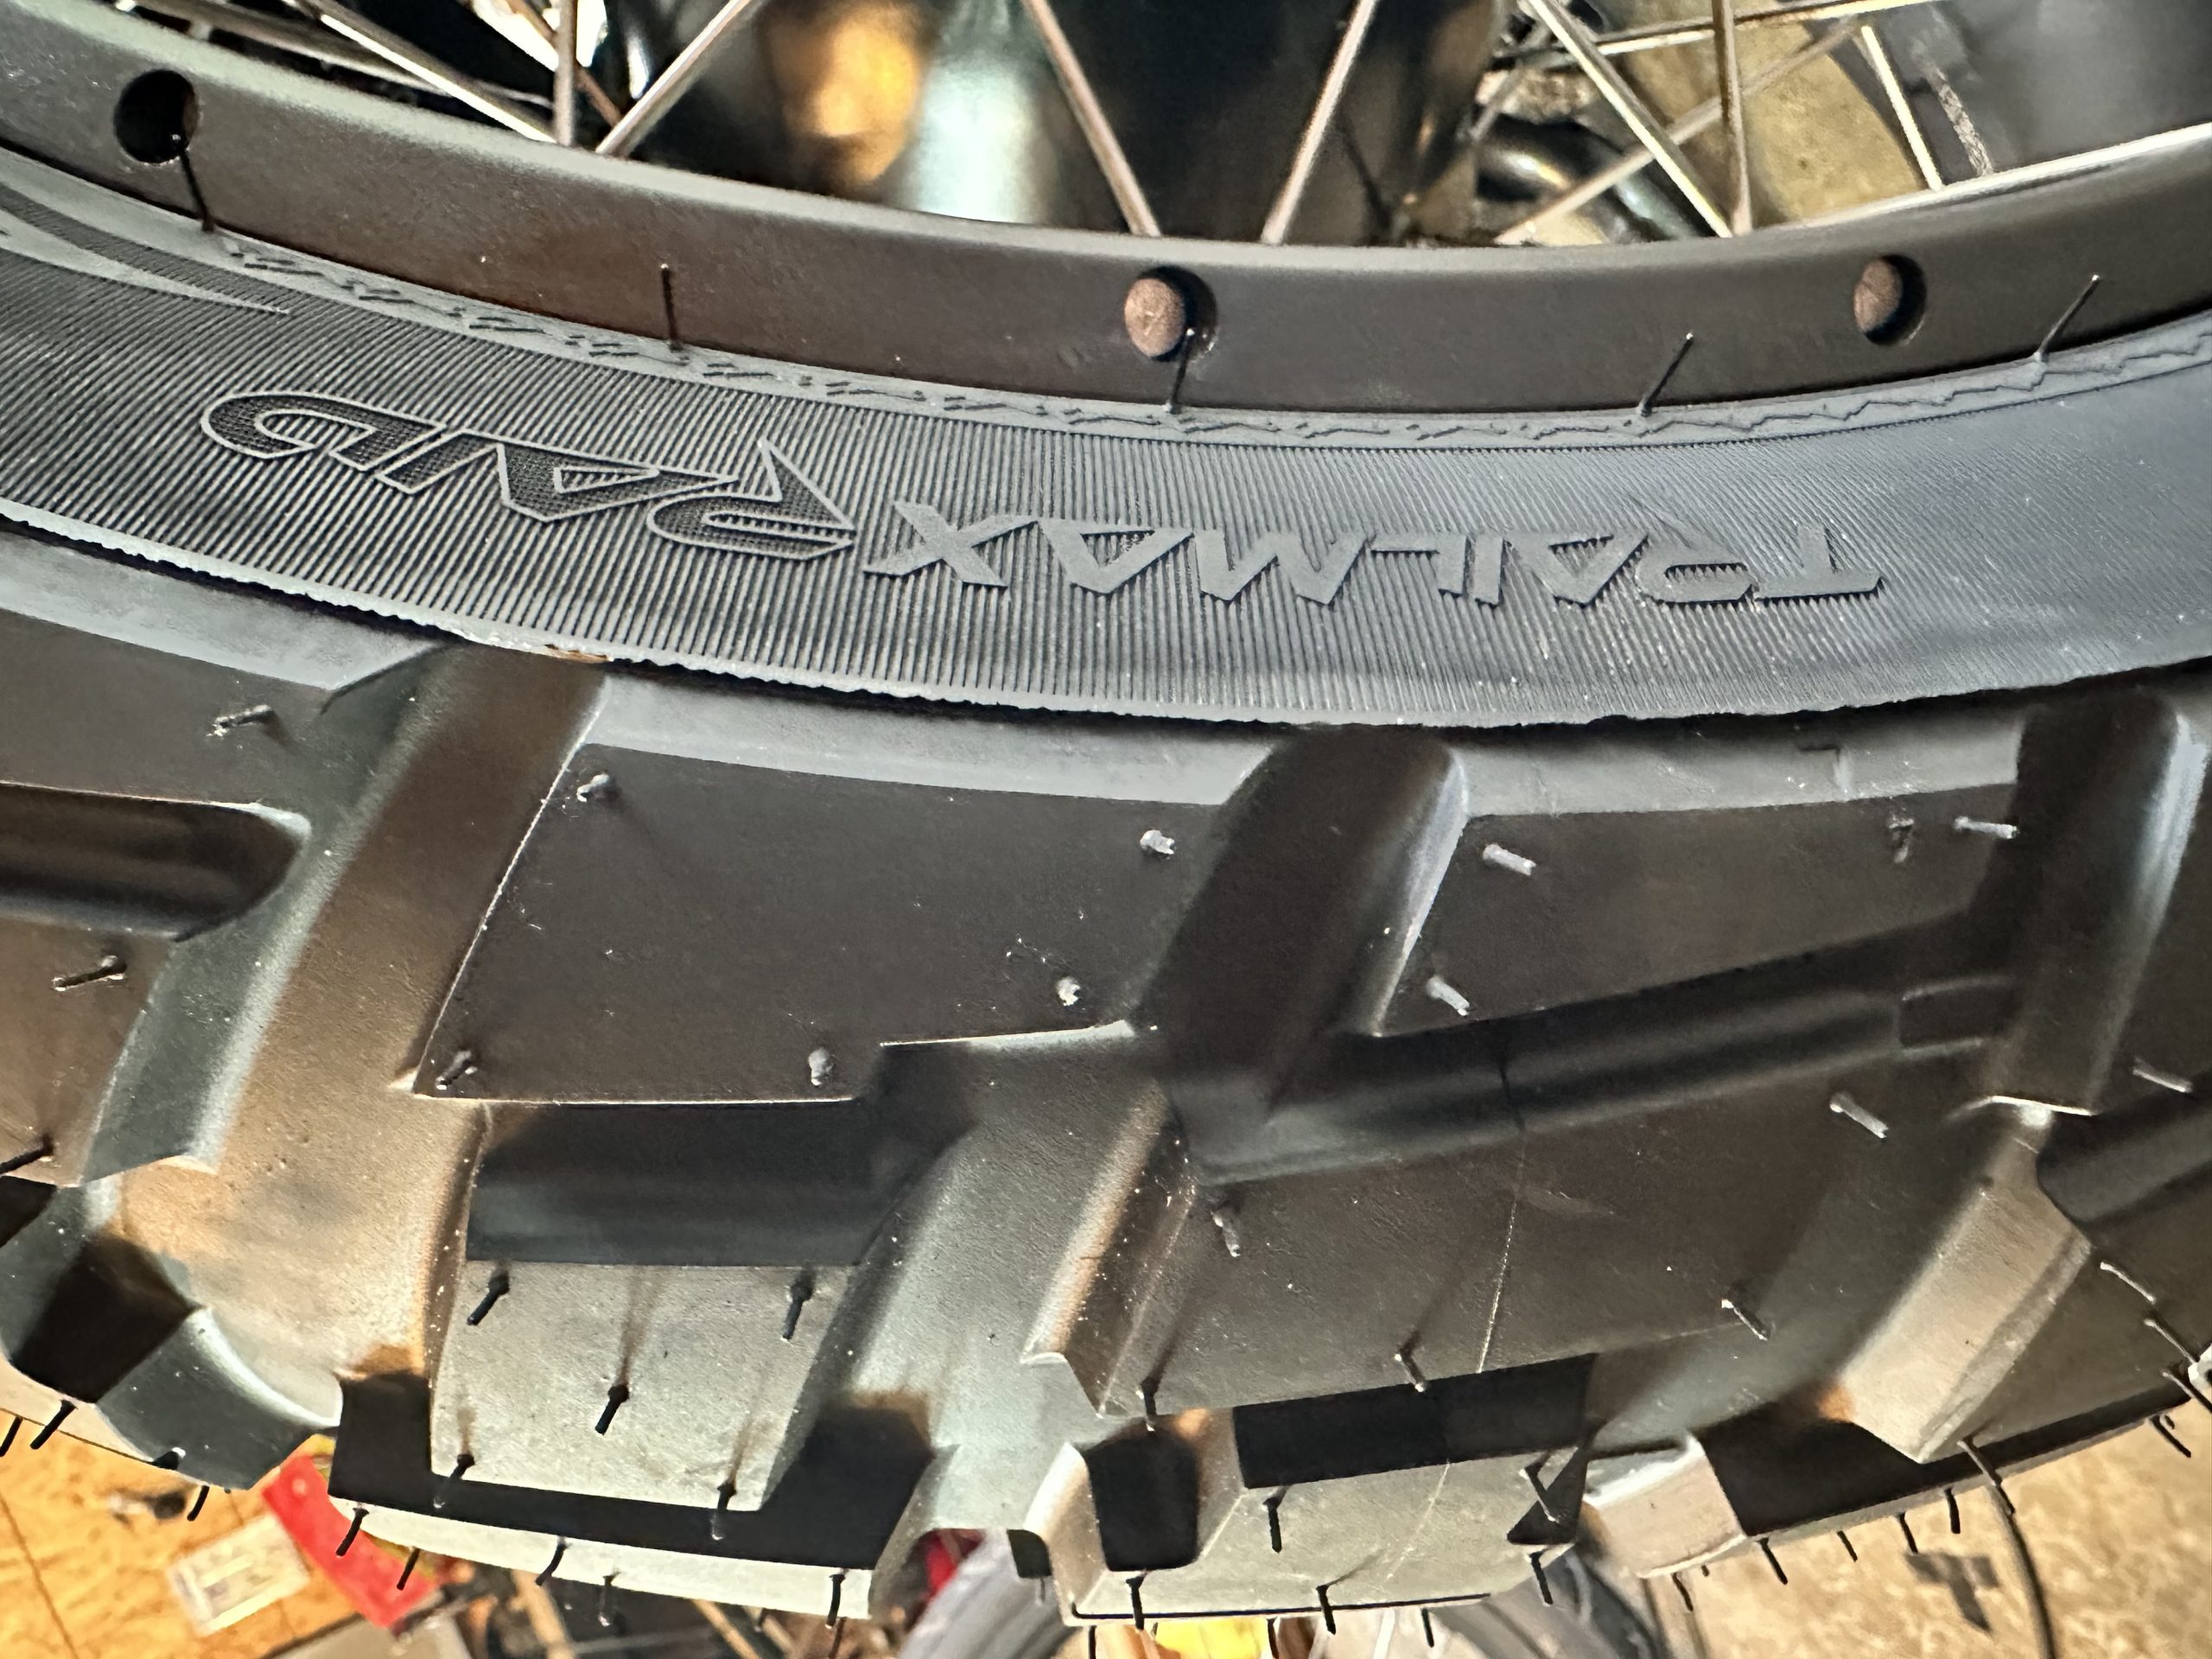 Dunlop Trailmax Raid: Filling the Gap in Dunlop’s Adventure Tire Lineup?